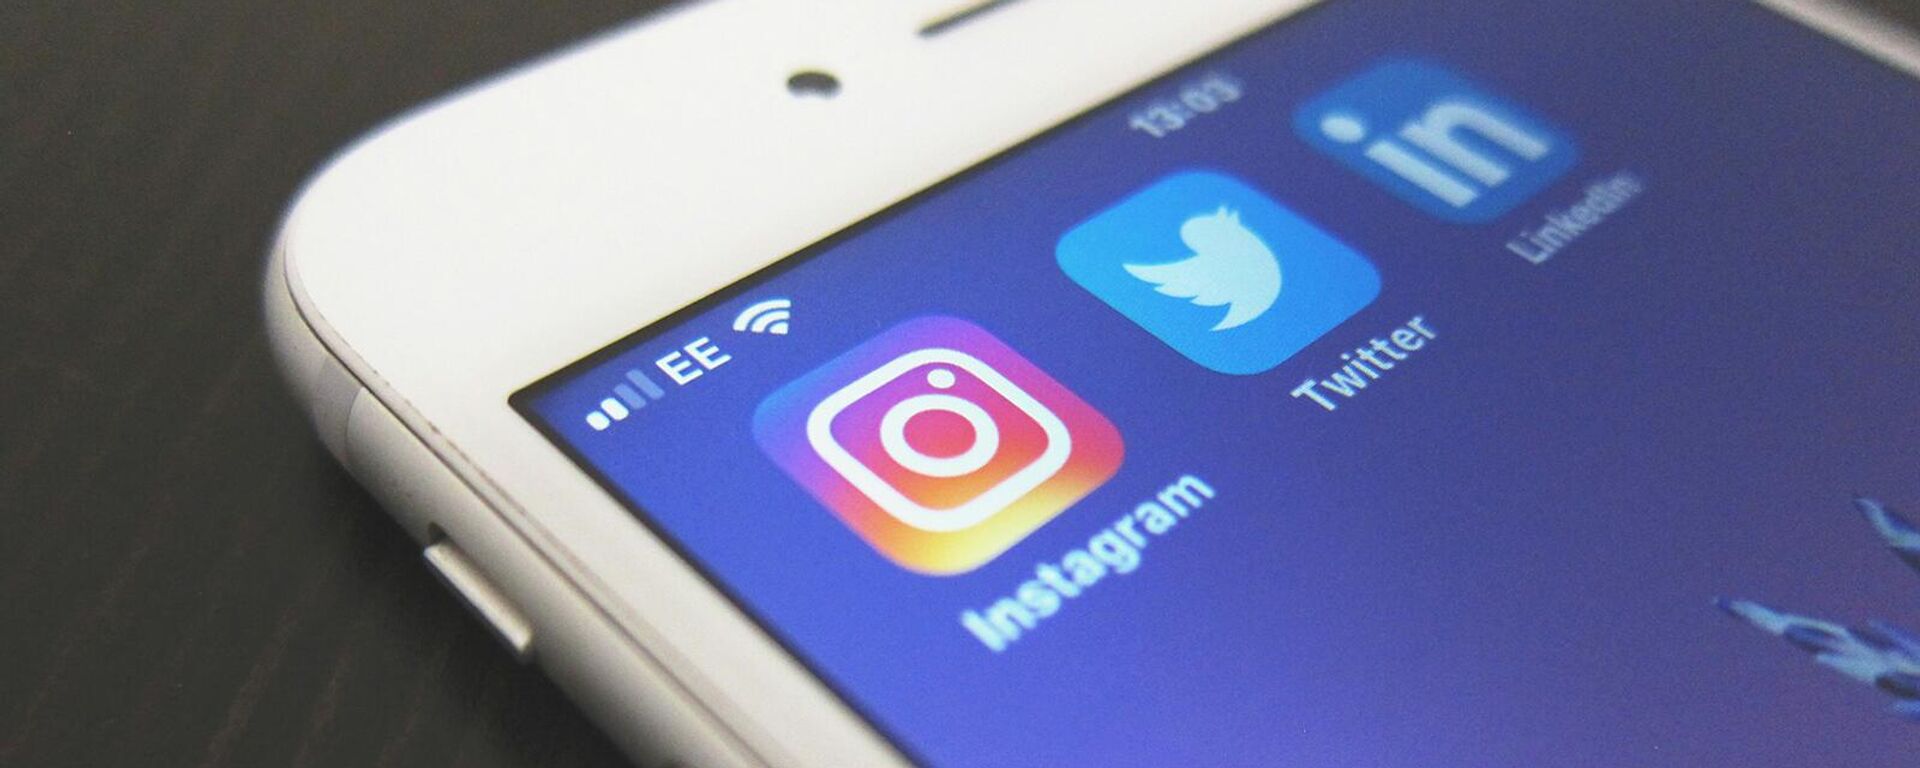 Смартфон с иконками приложений Instagram, Twitter и LinkedIn - Sputnik Արմենիա, 1920, 02.12.2021